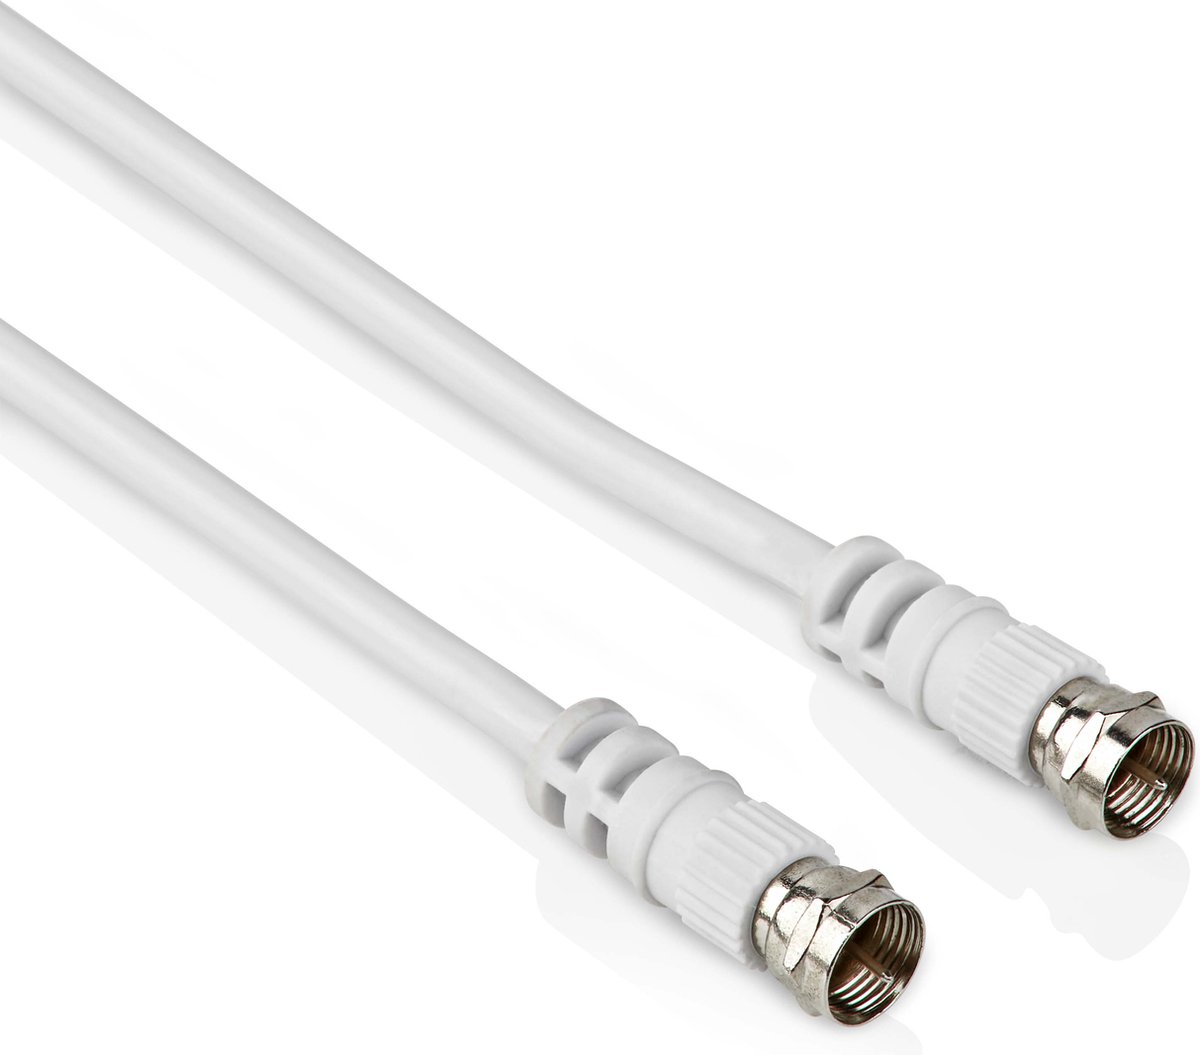 Antenne kabel - F-connector - Dubbelvoudig afgeschermd - Male naar Male - 80dB - 10 meter - Wit - Allteq - Allteq